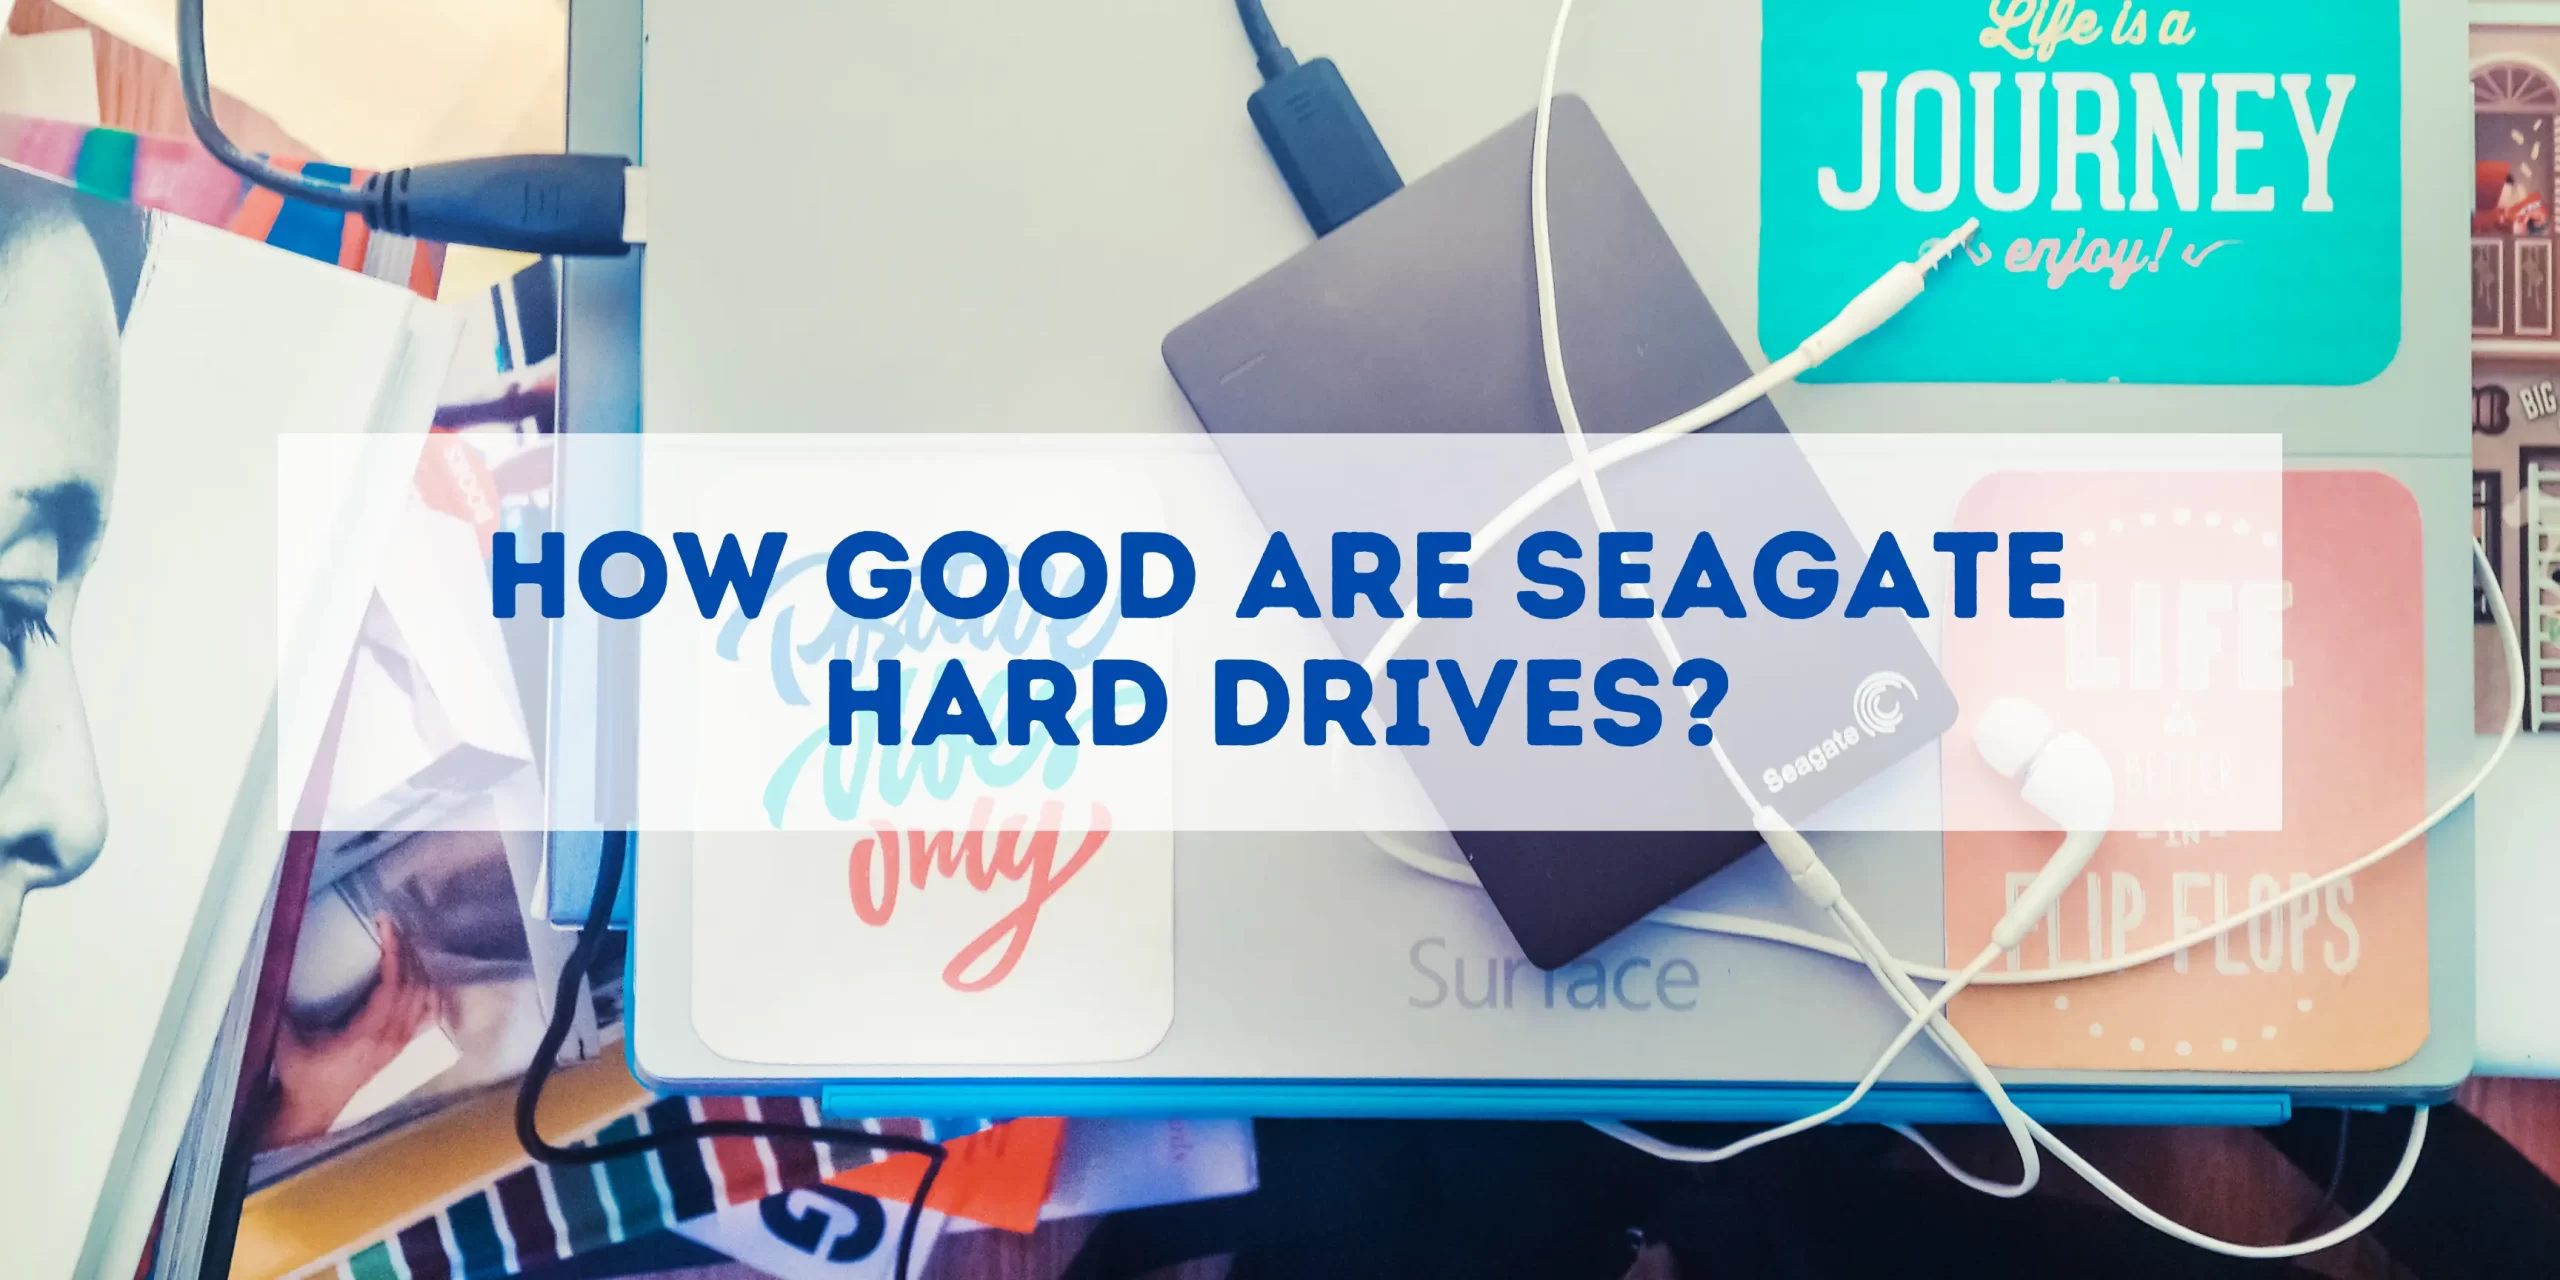 are seagate hard drives good